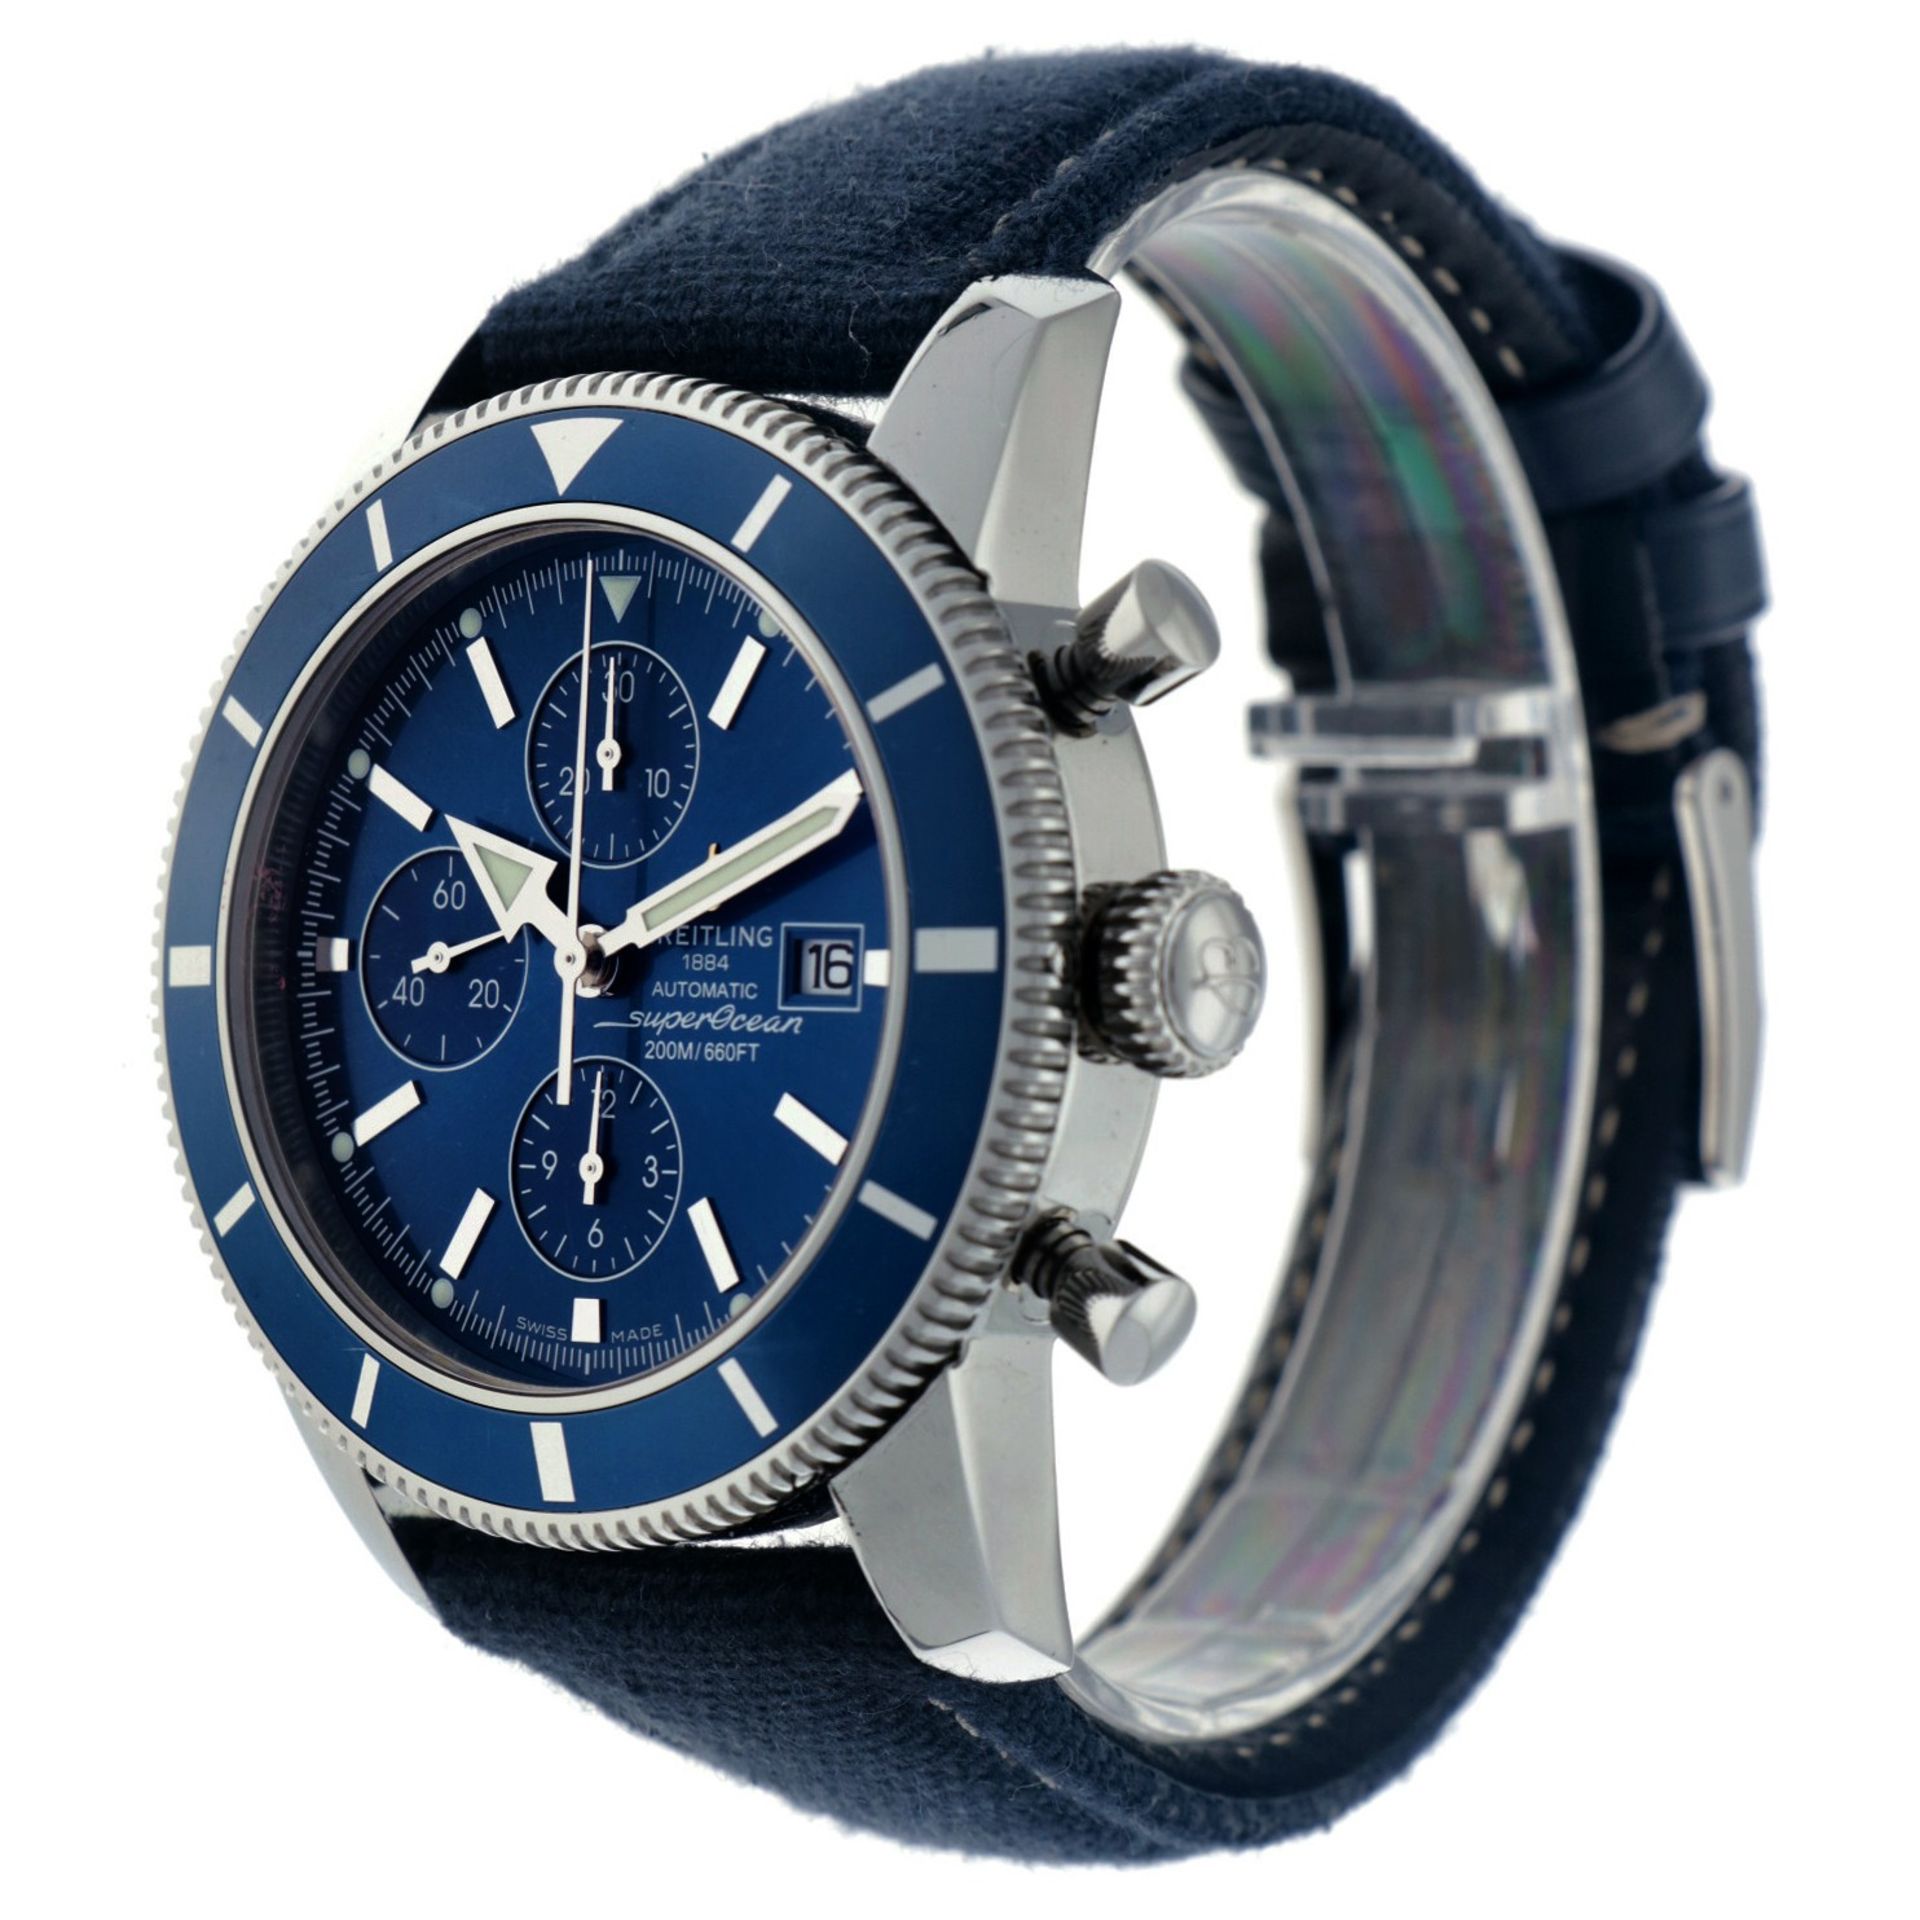 Breitling Superocean A13320 - Men's watch. - Image 2 of 6